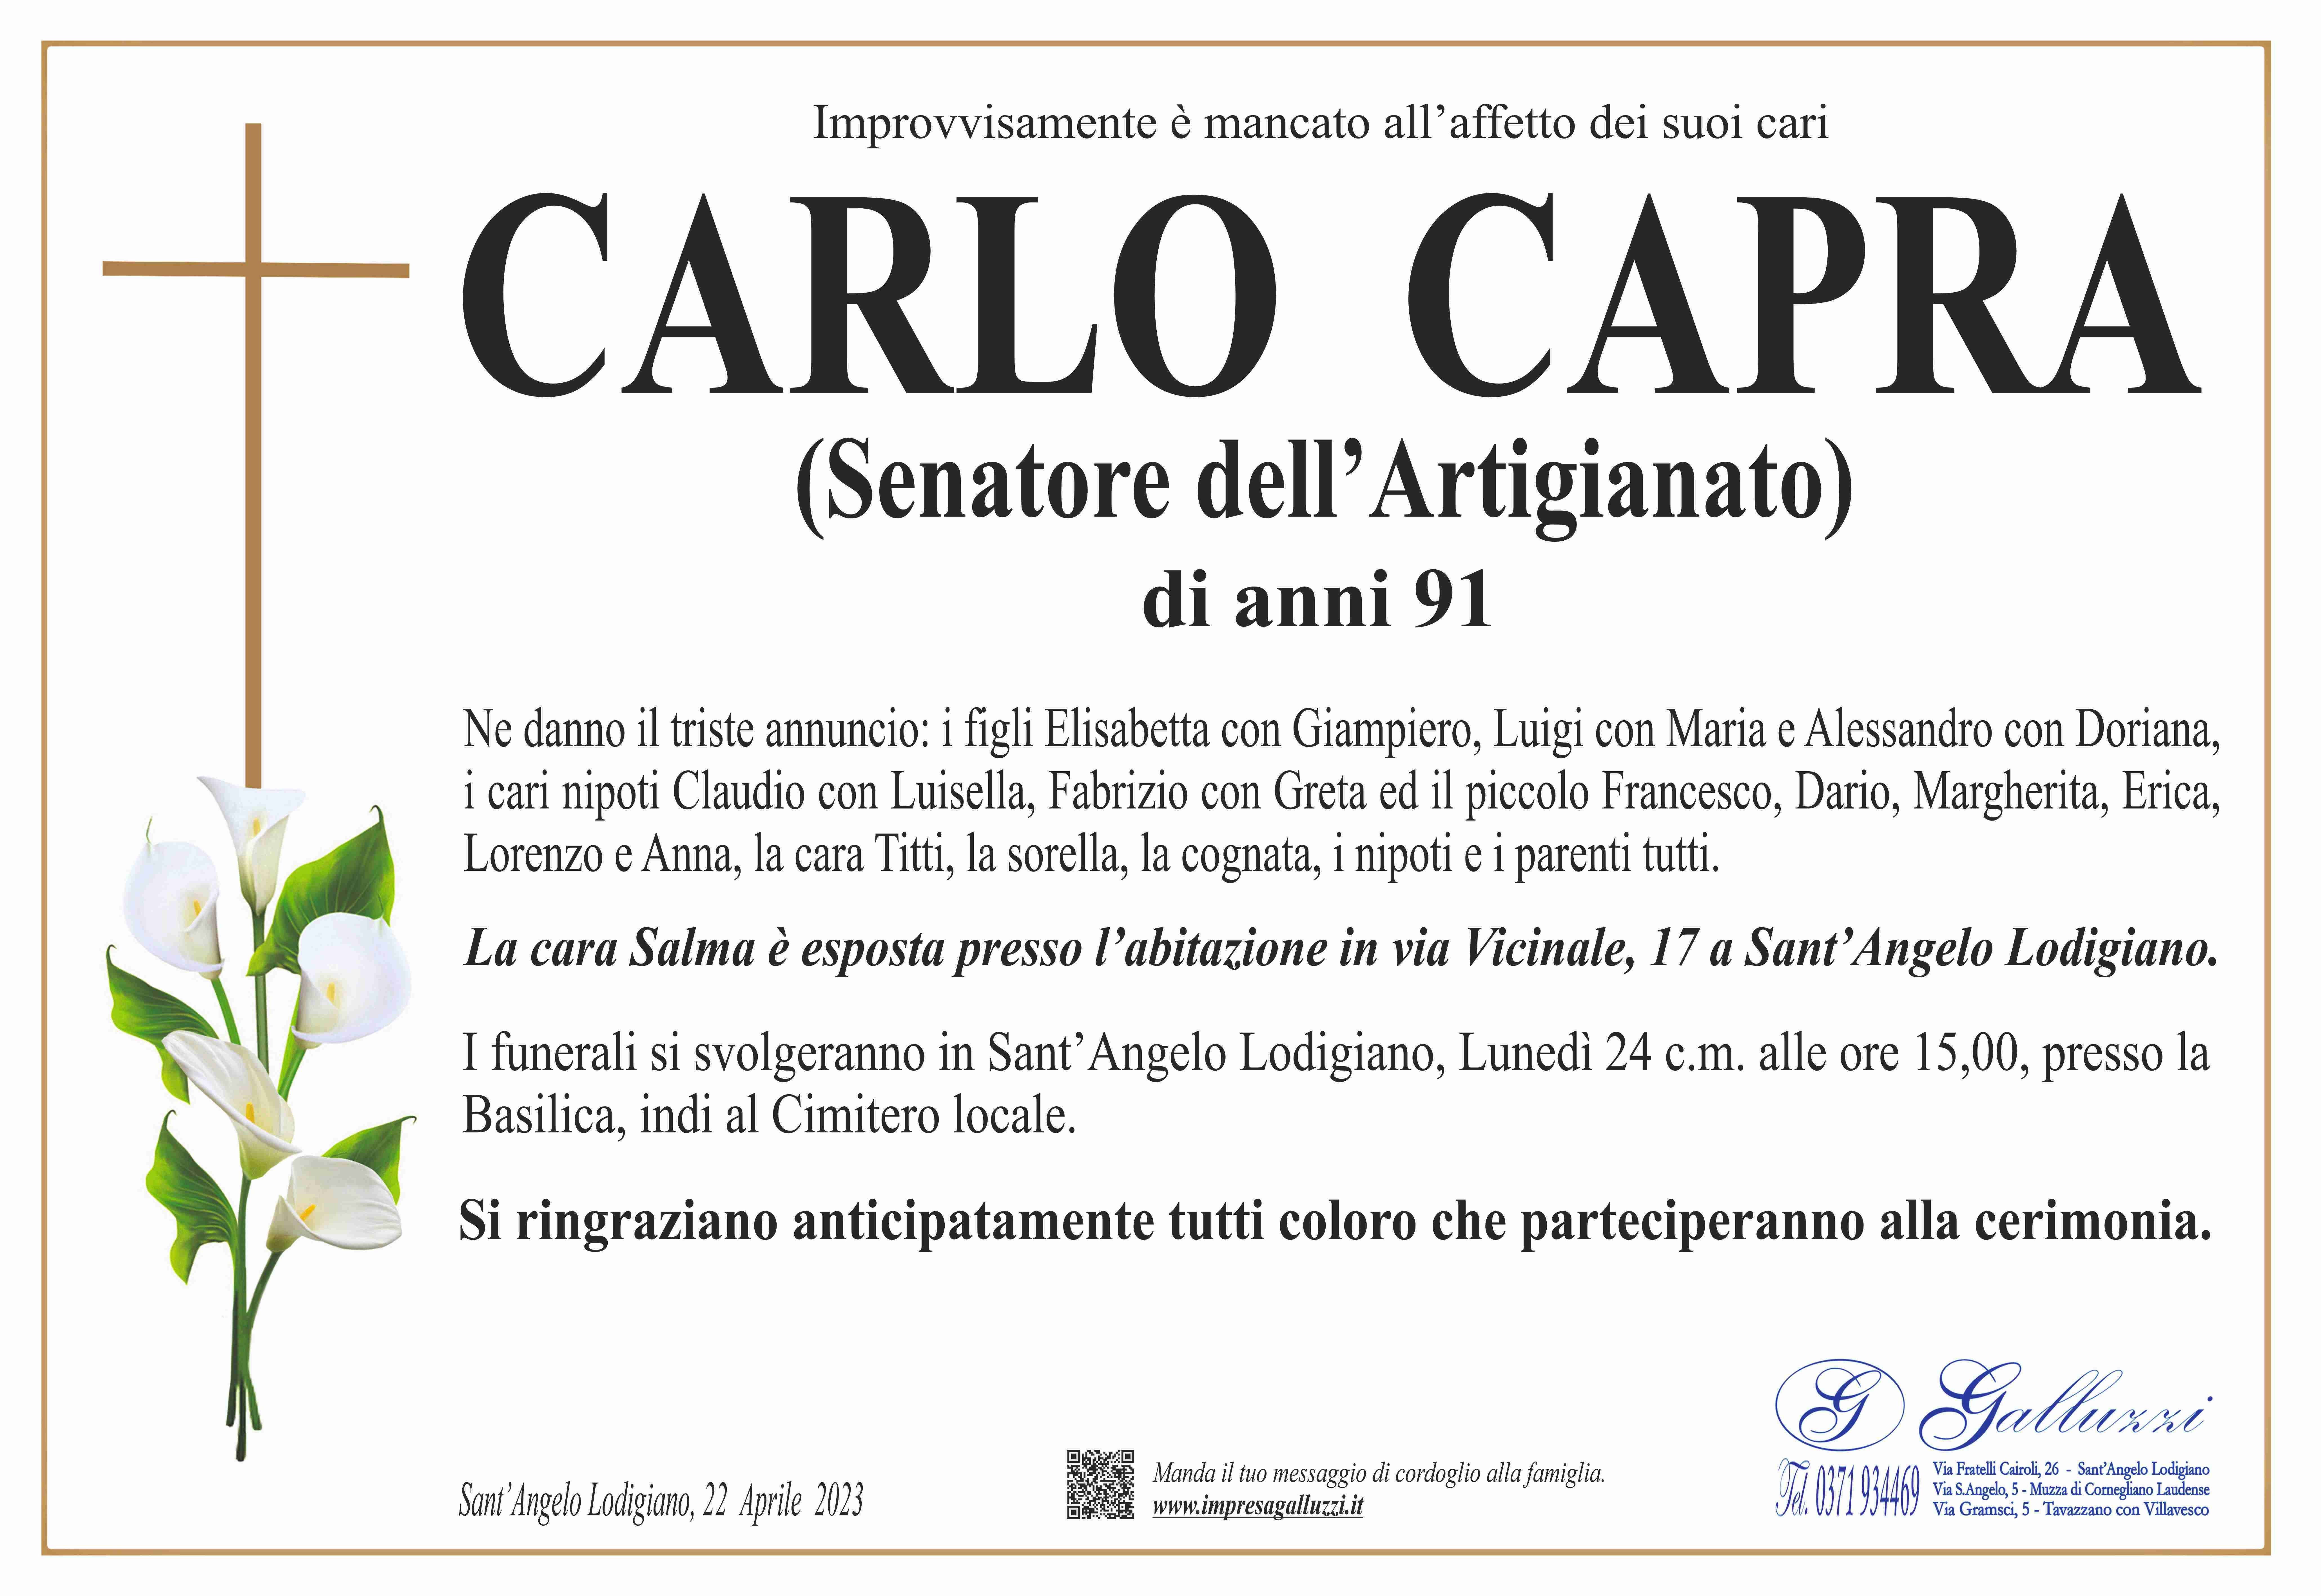 Carlo Capra